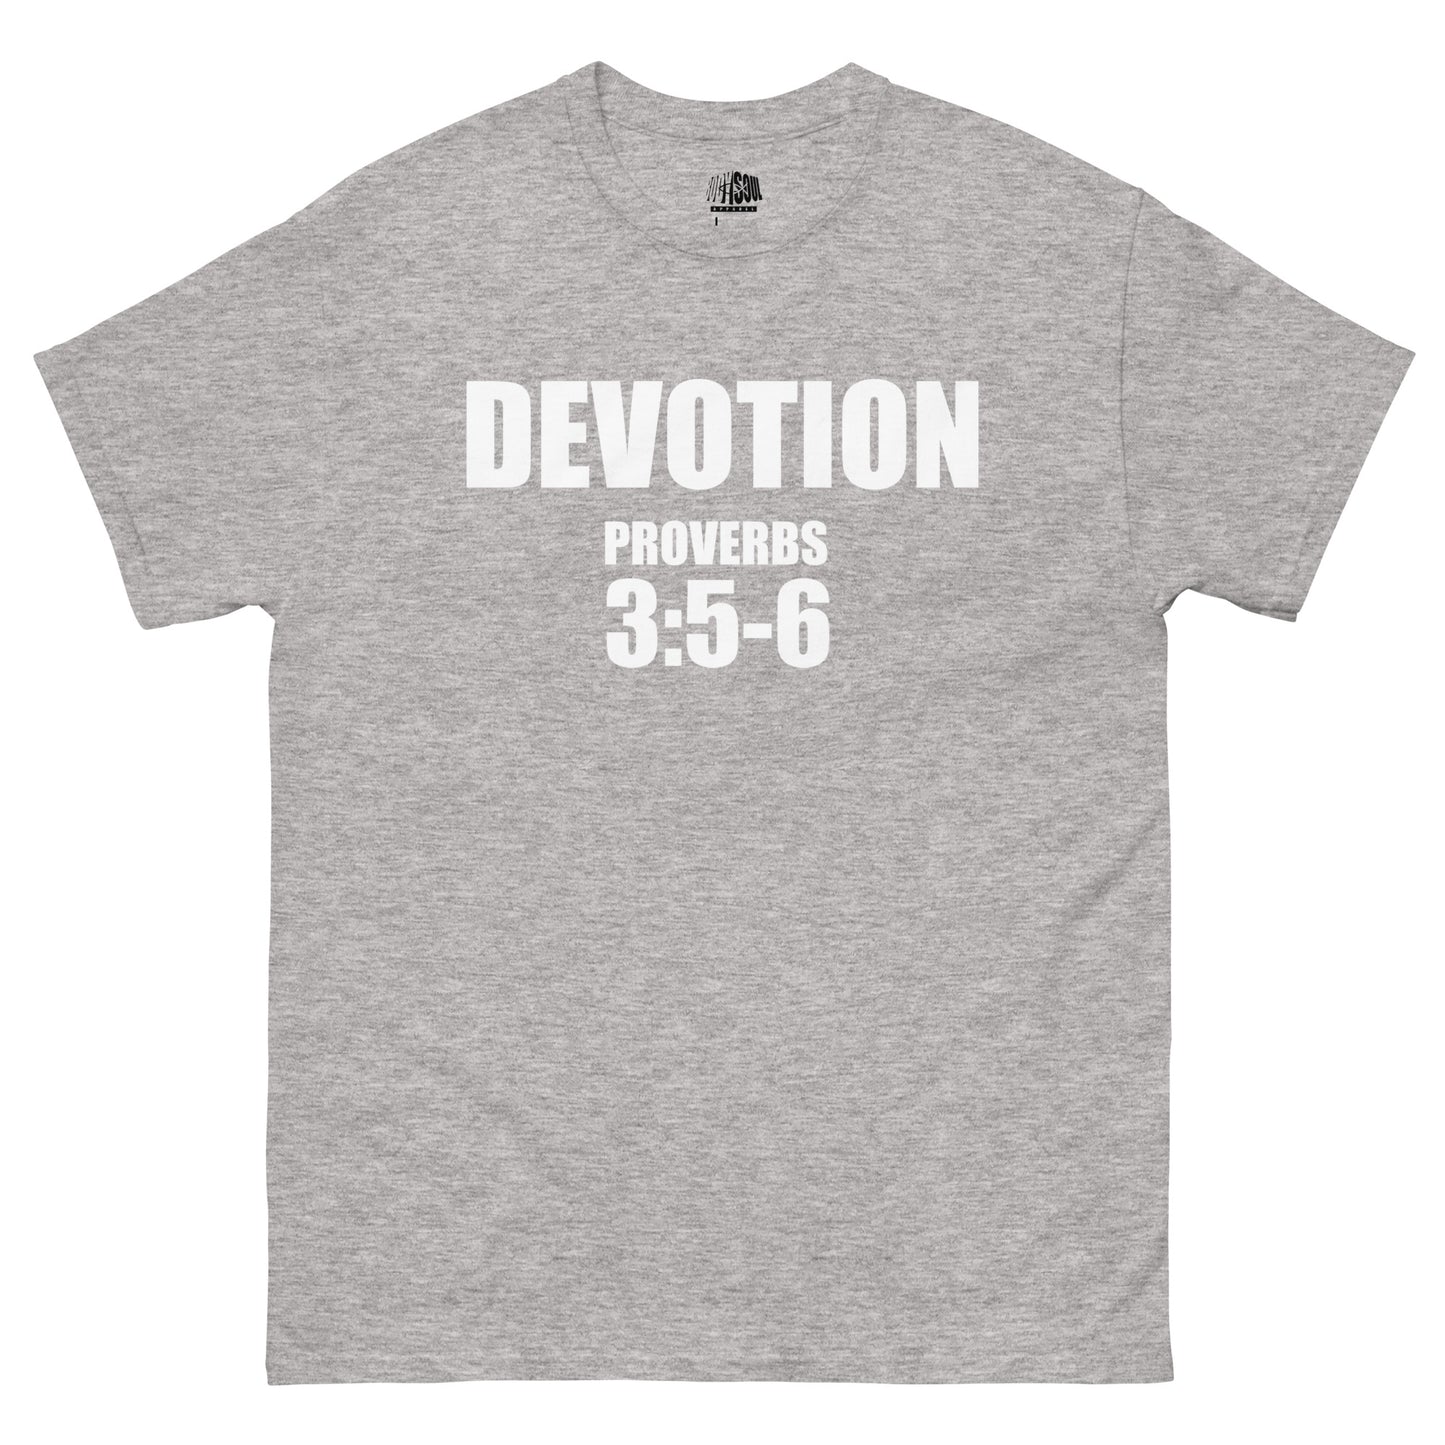 DEVOTION  Proverbs 3:5-6